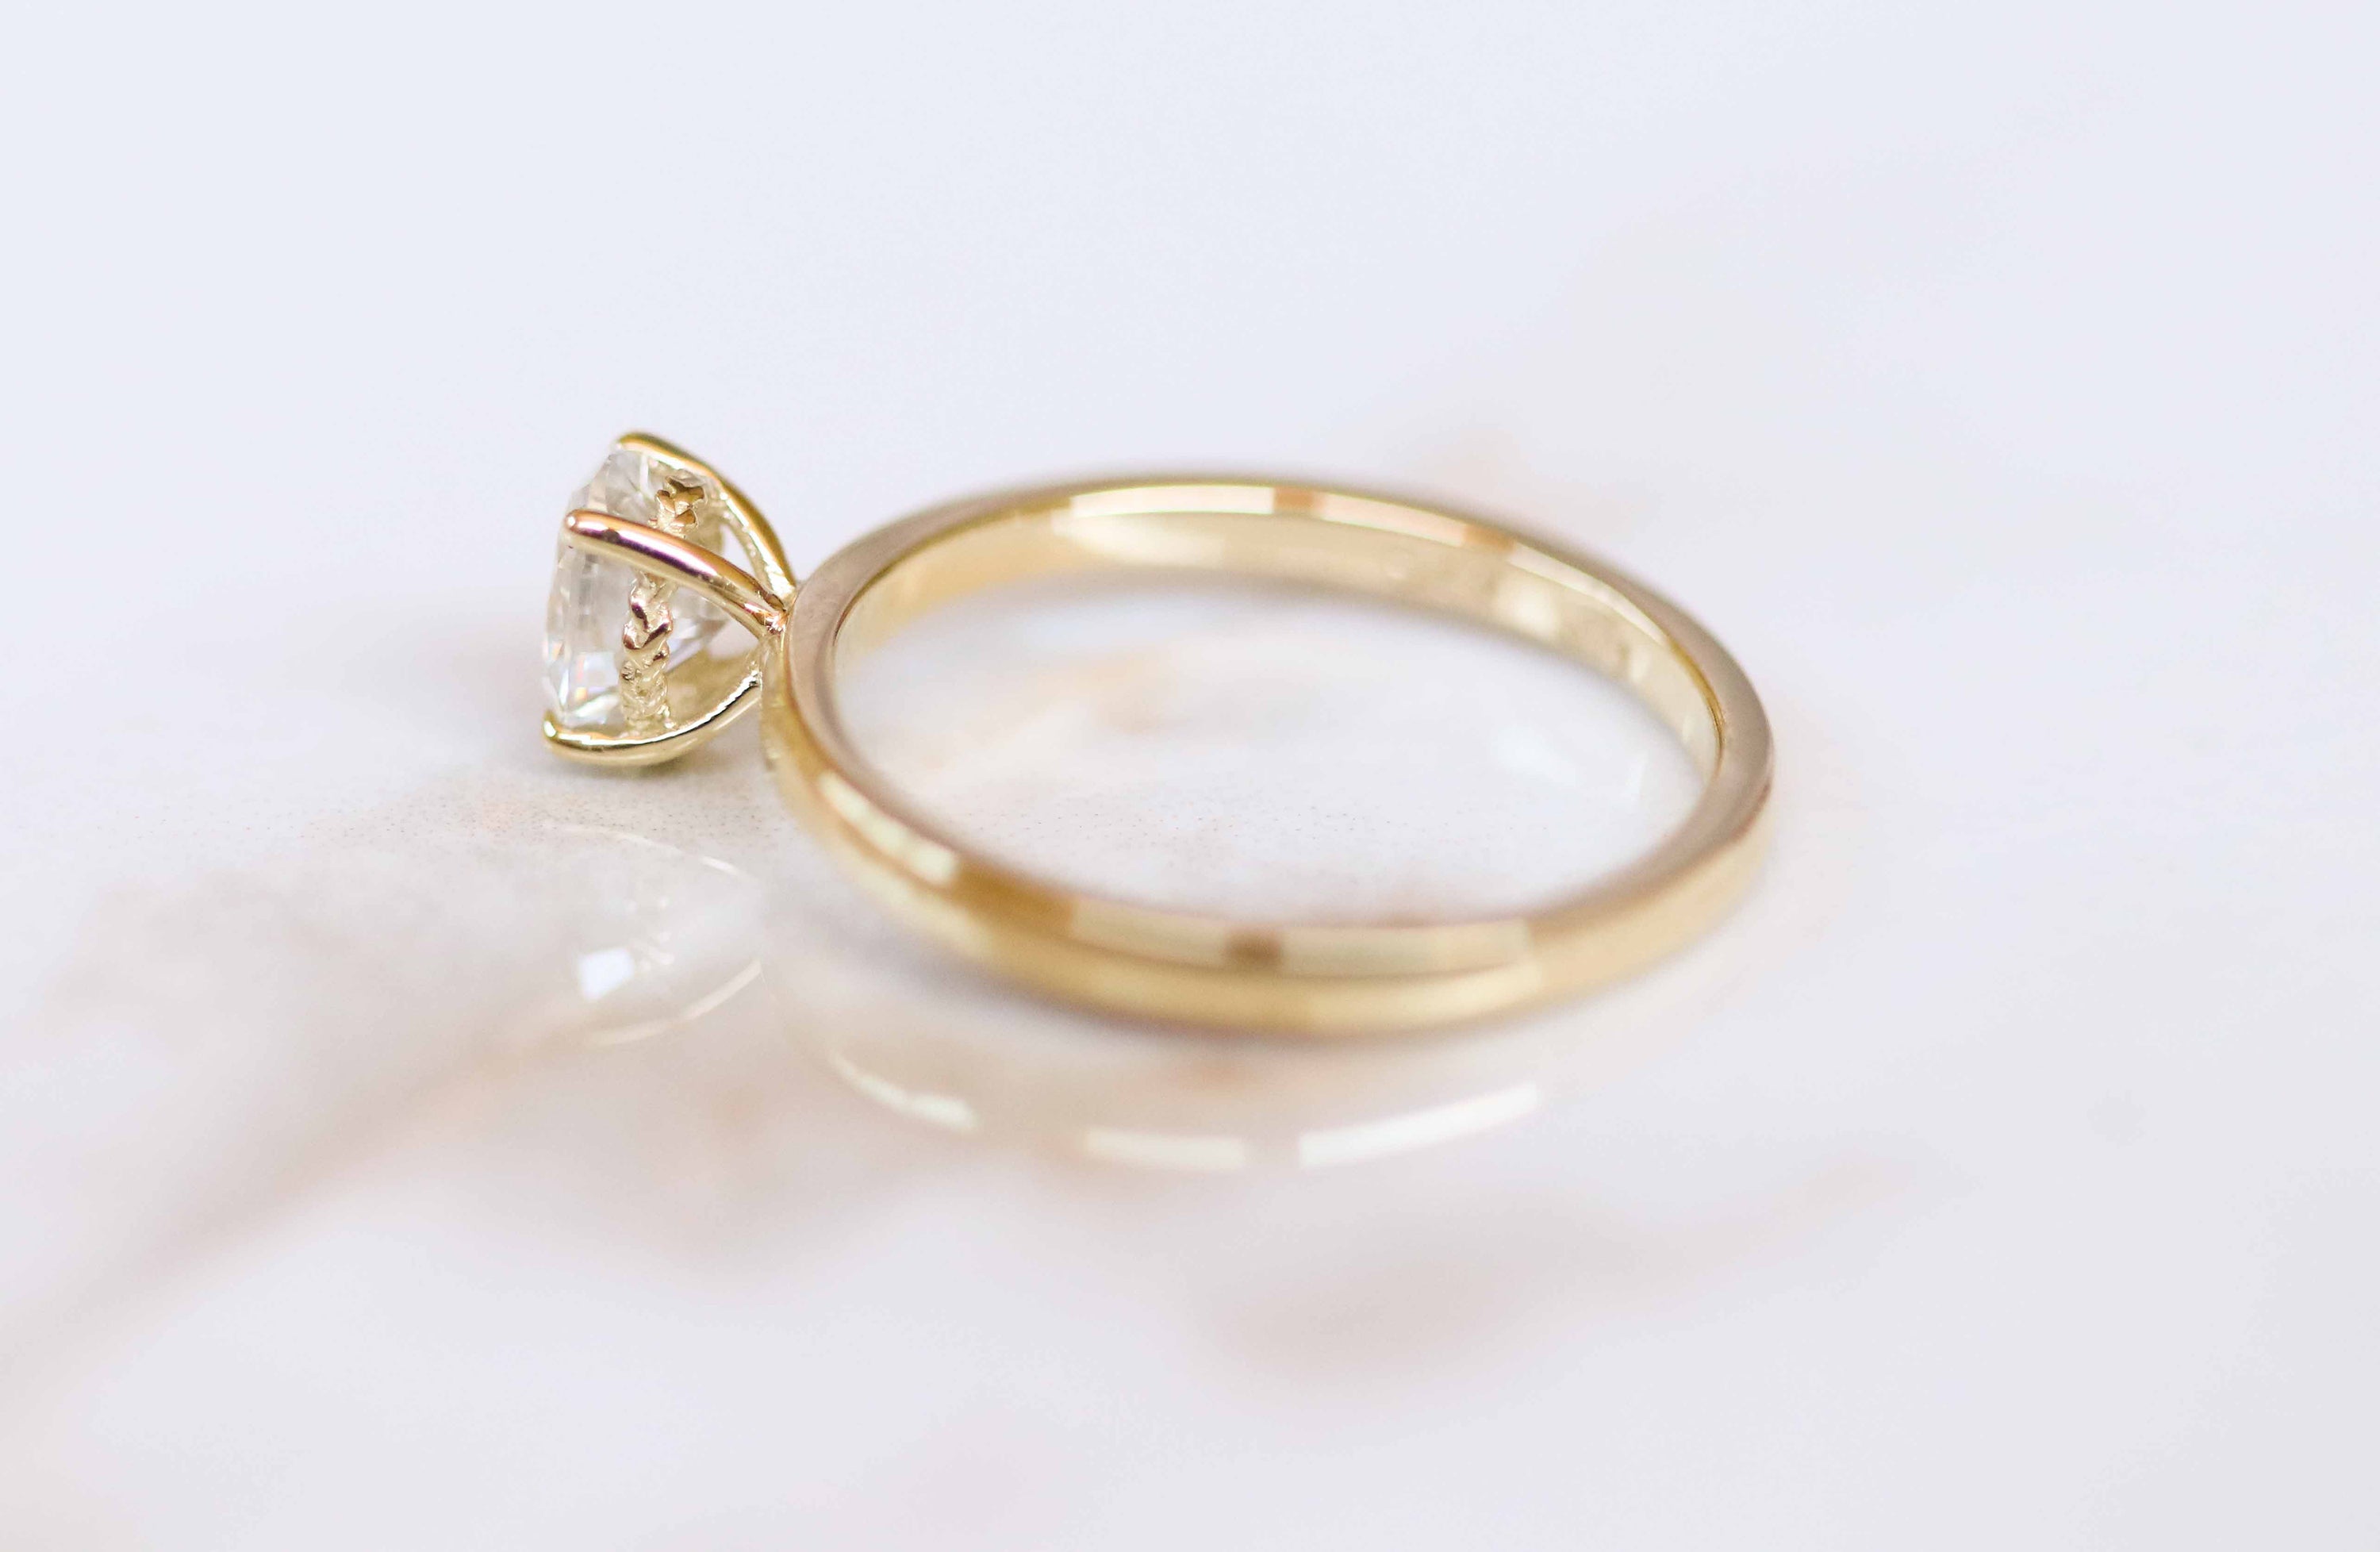 Nayeli Oval Moissanite Ring In Gold